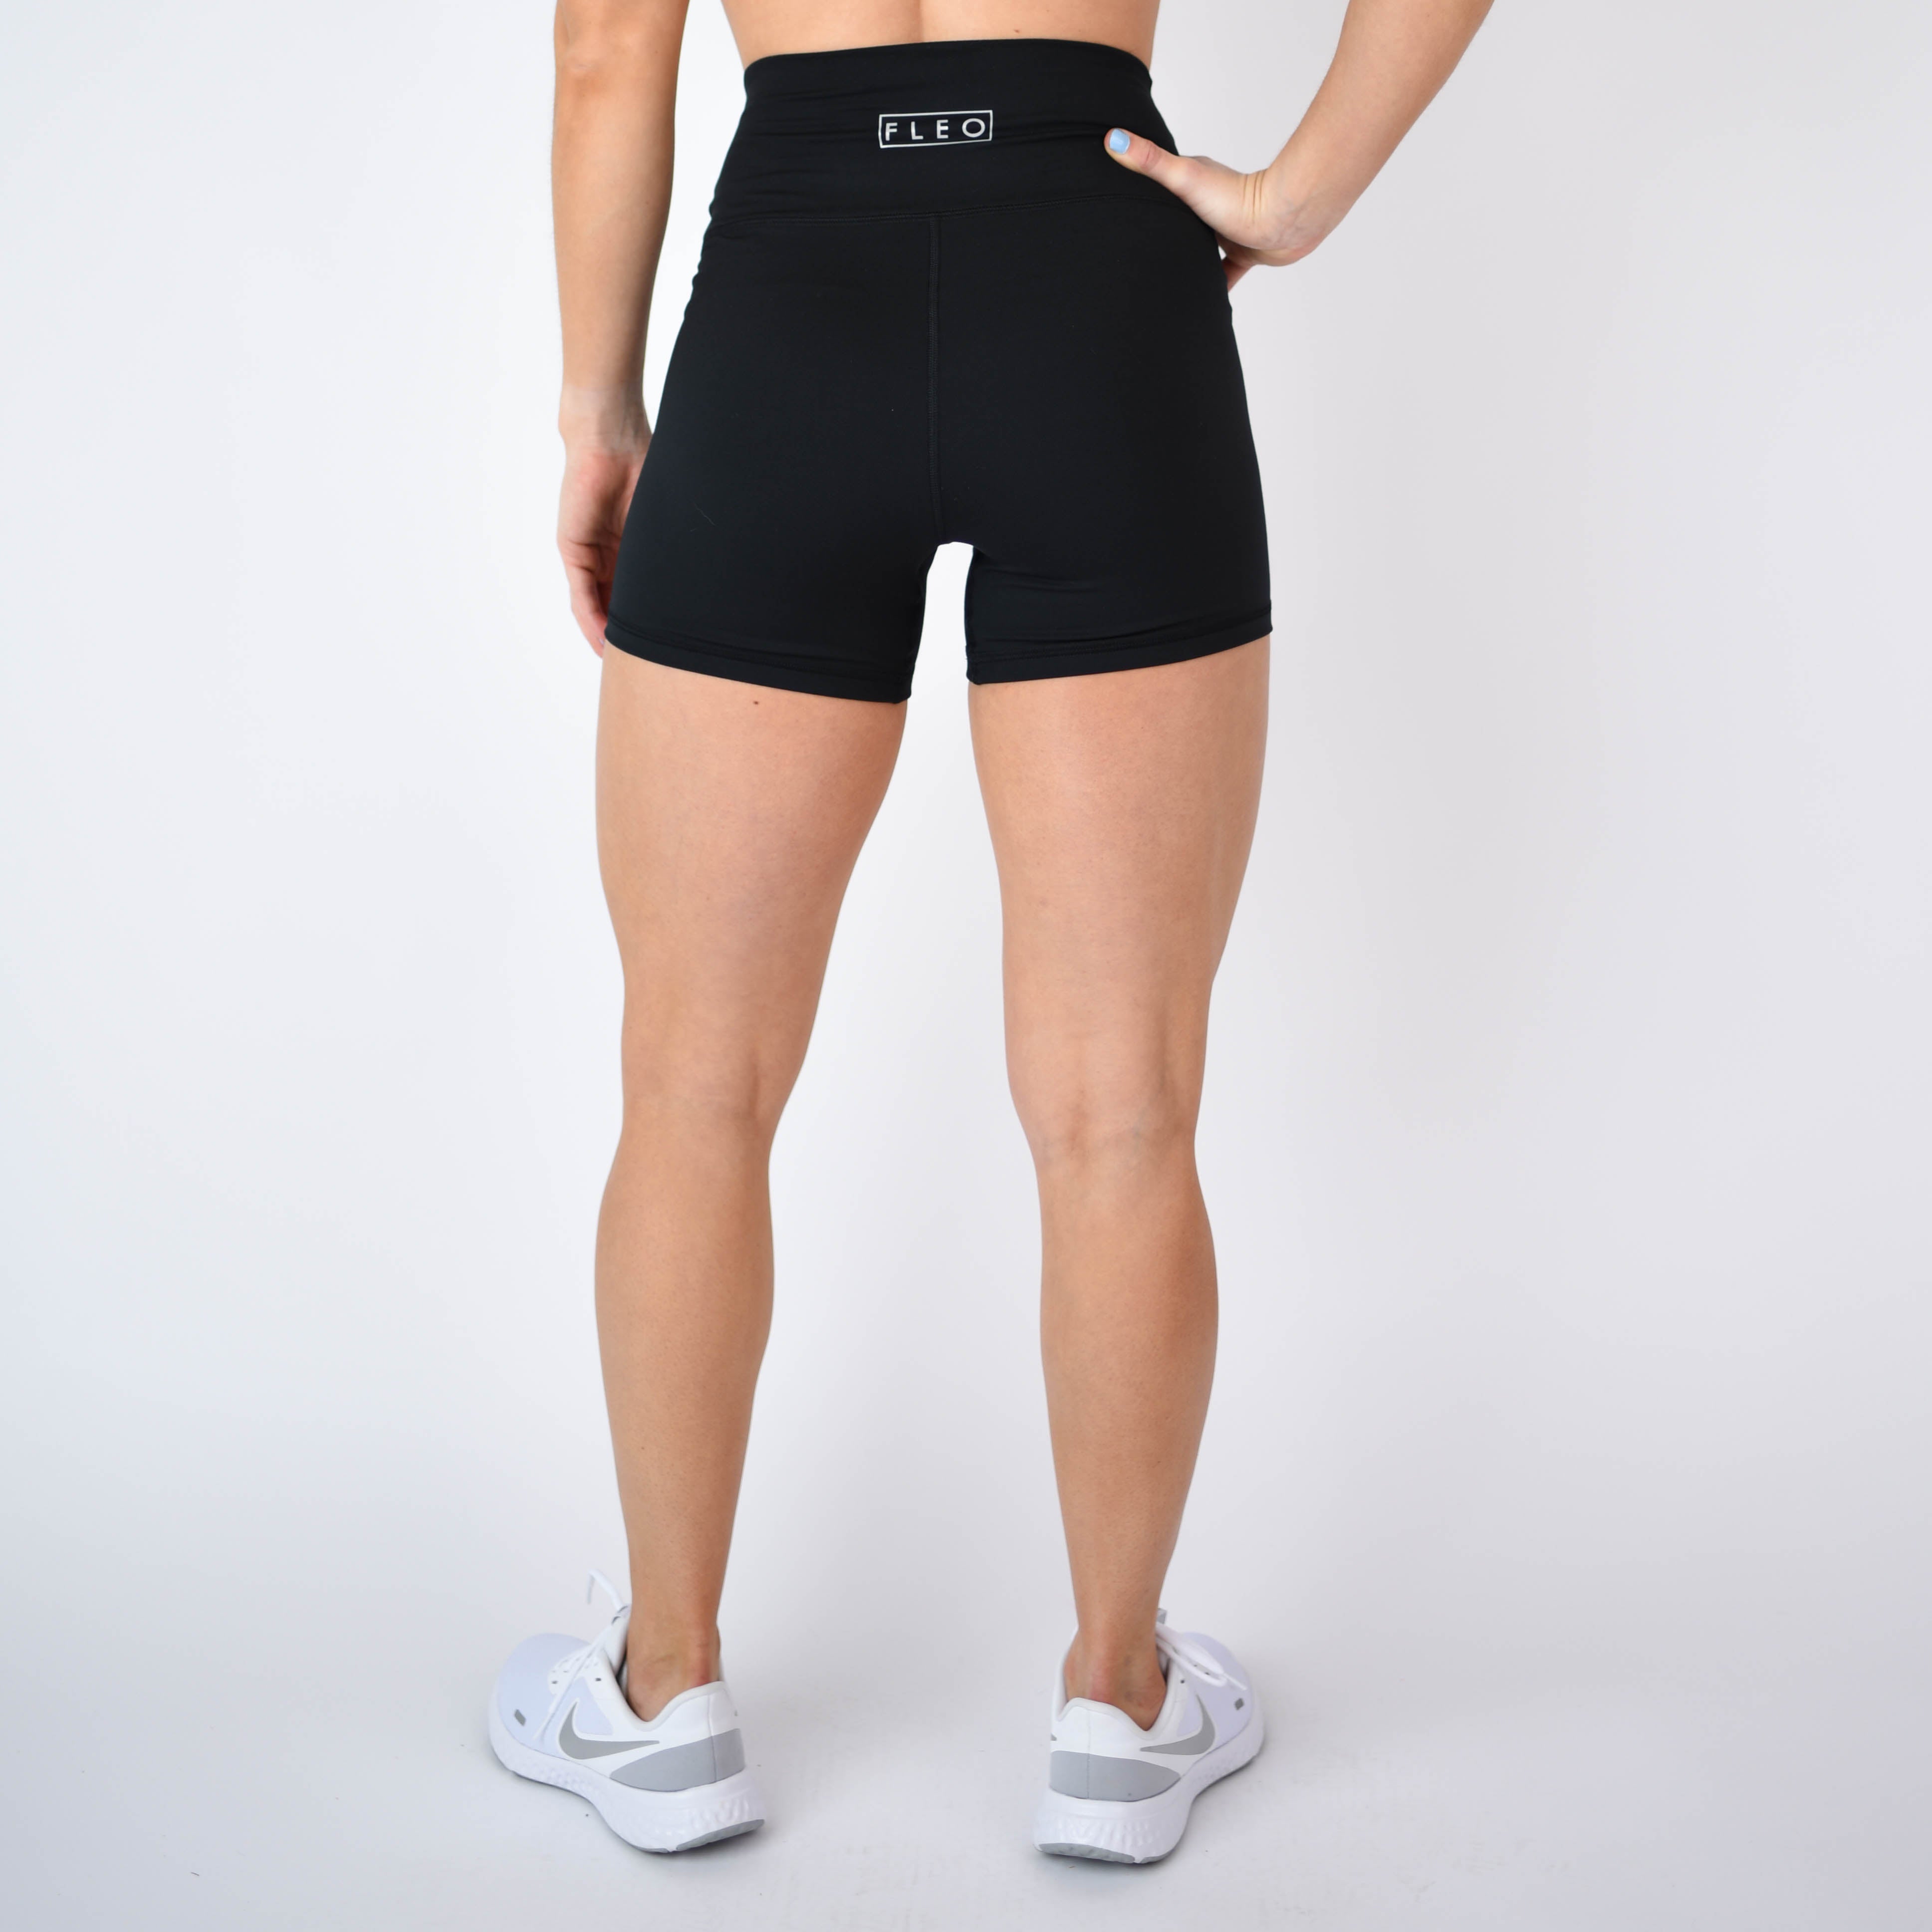 Black 4 Inch Inseam Gym Shorts